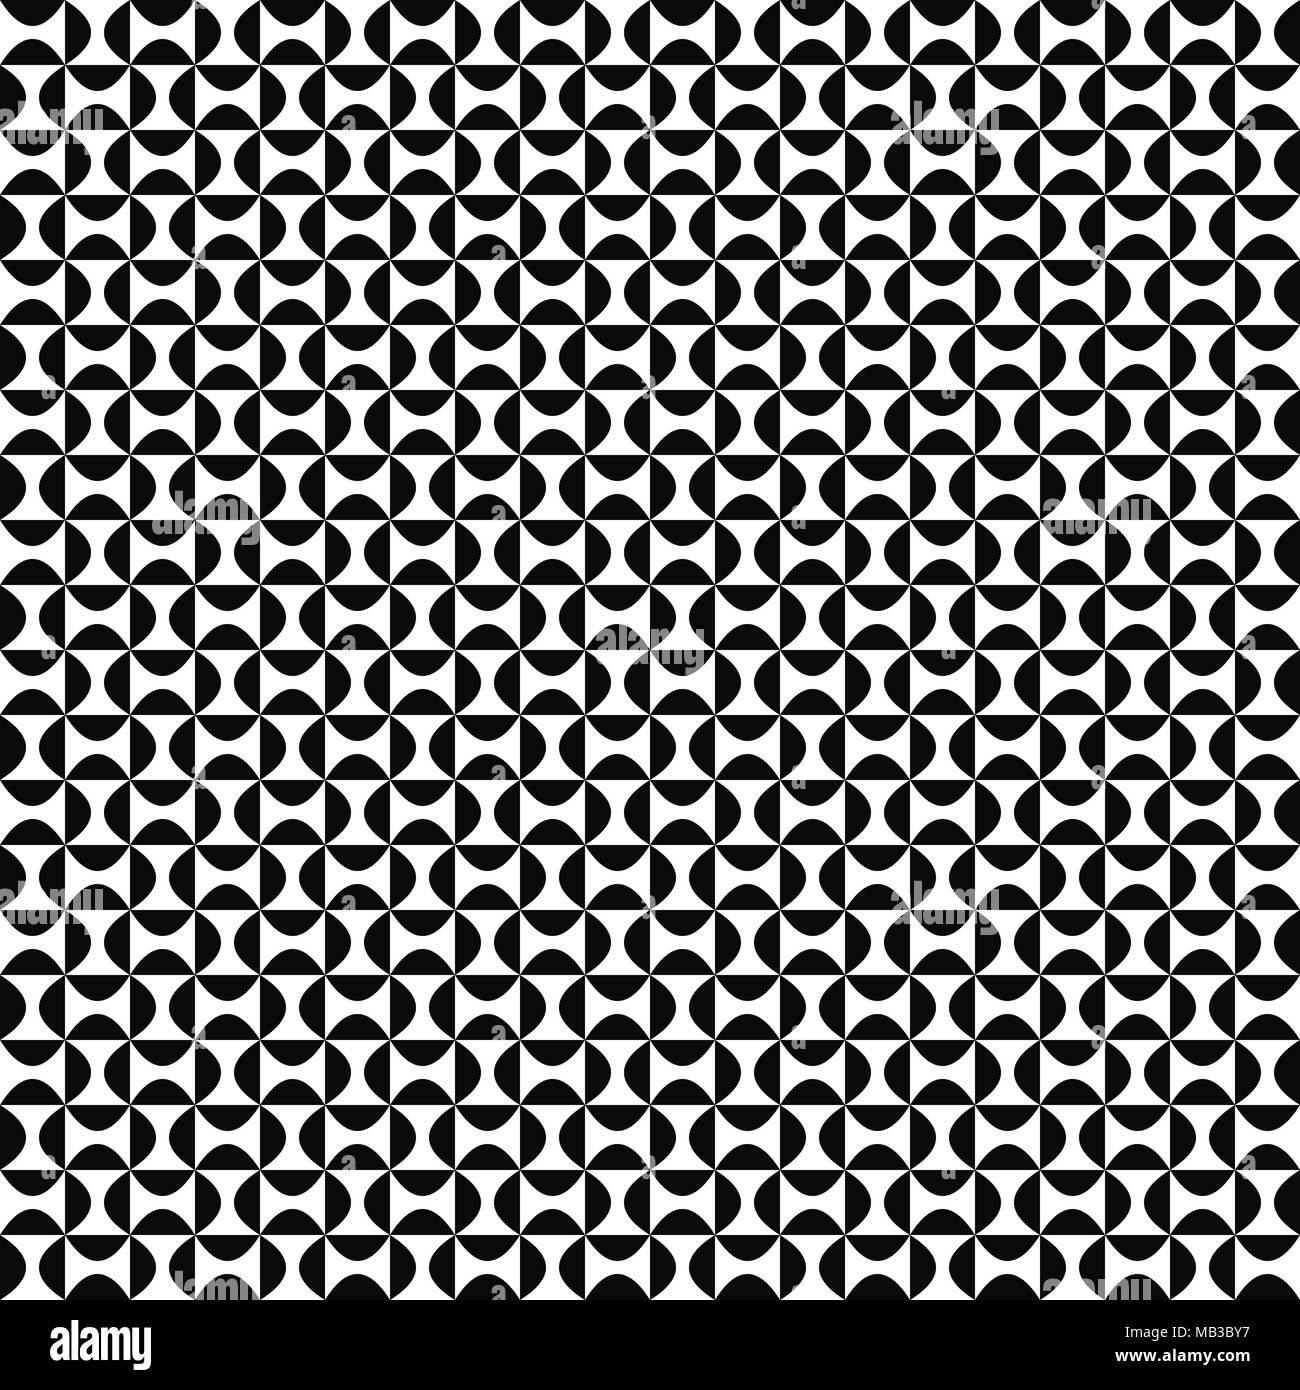 Nahtlose geometrische monochrome gebogene Form Muster Stock Vektor